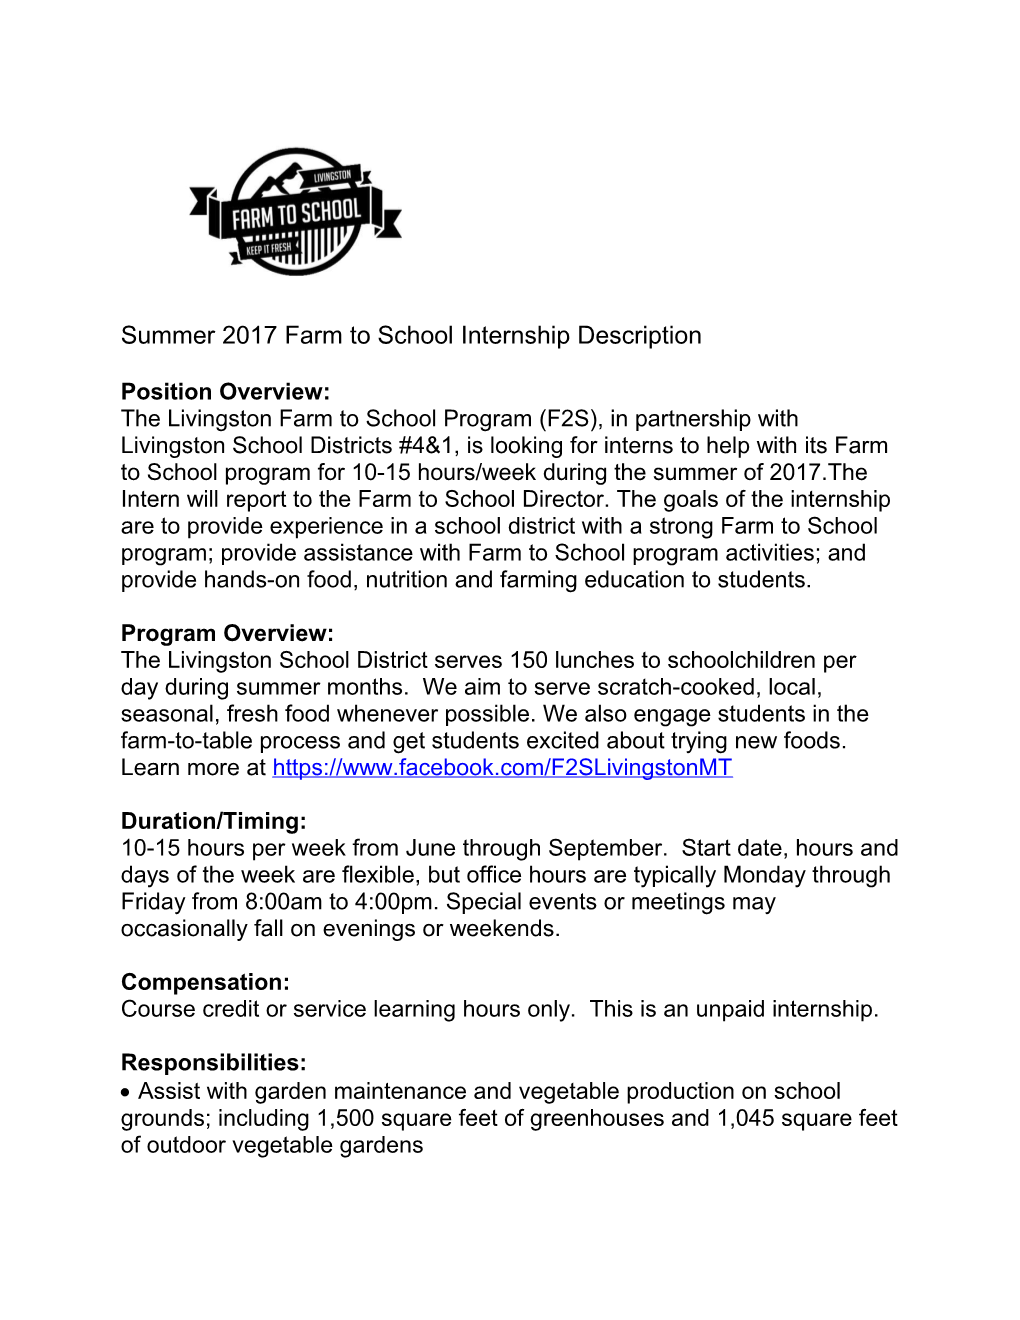 Summer 2017 Farm to Schoolinternship Description